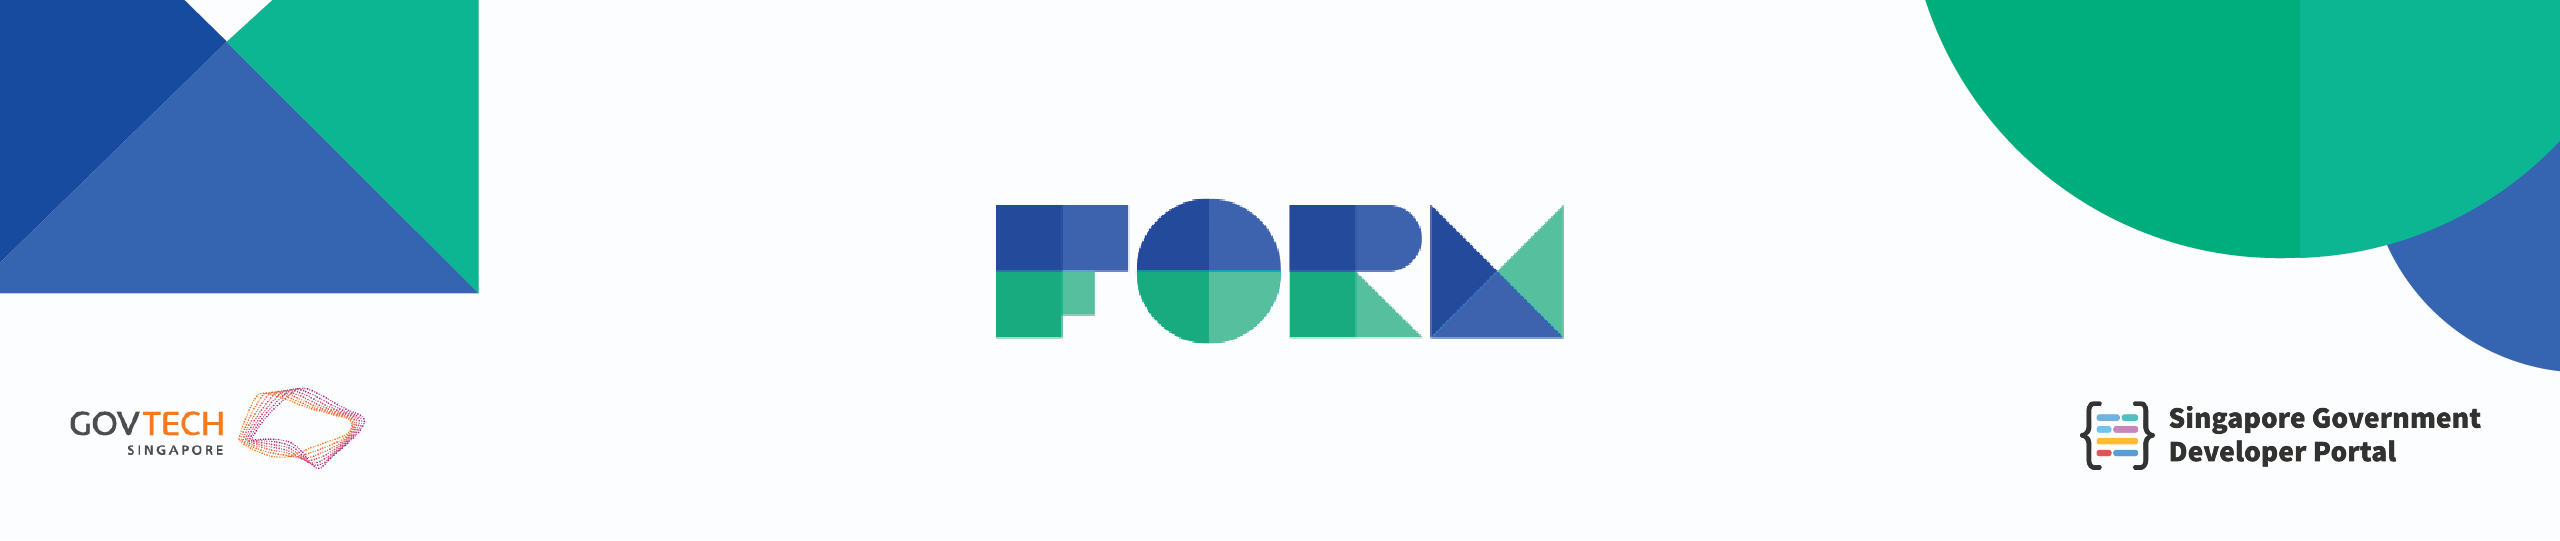 FormSG header banner